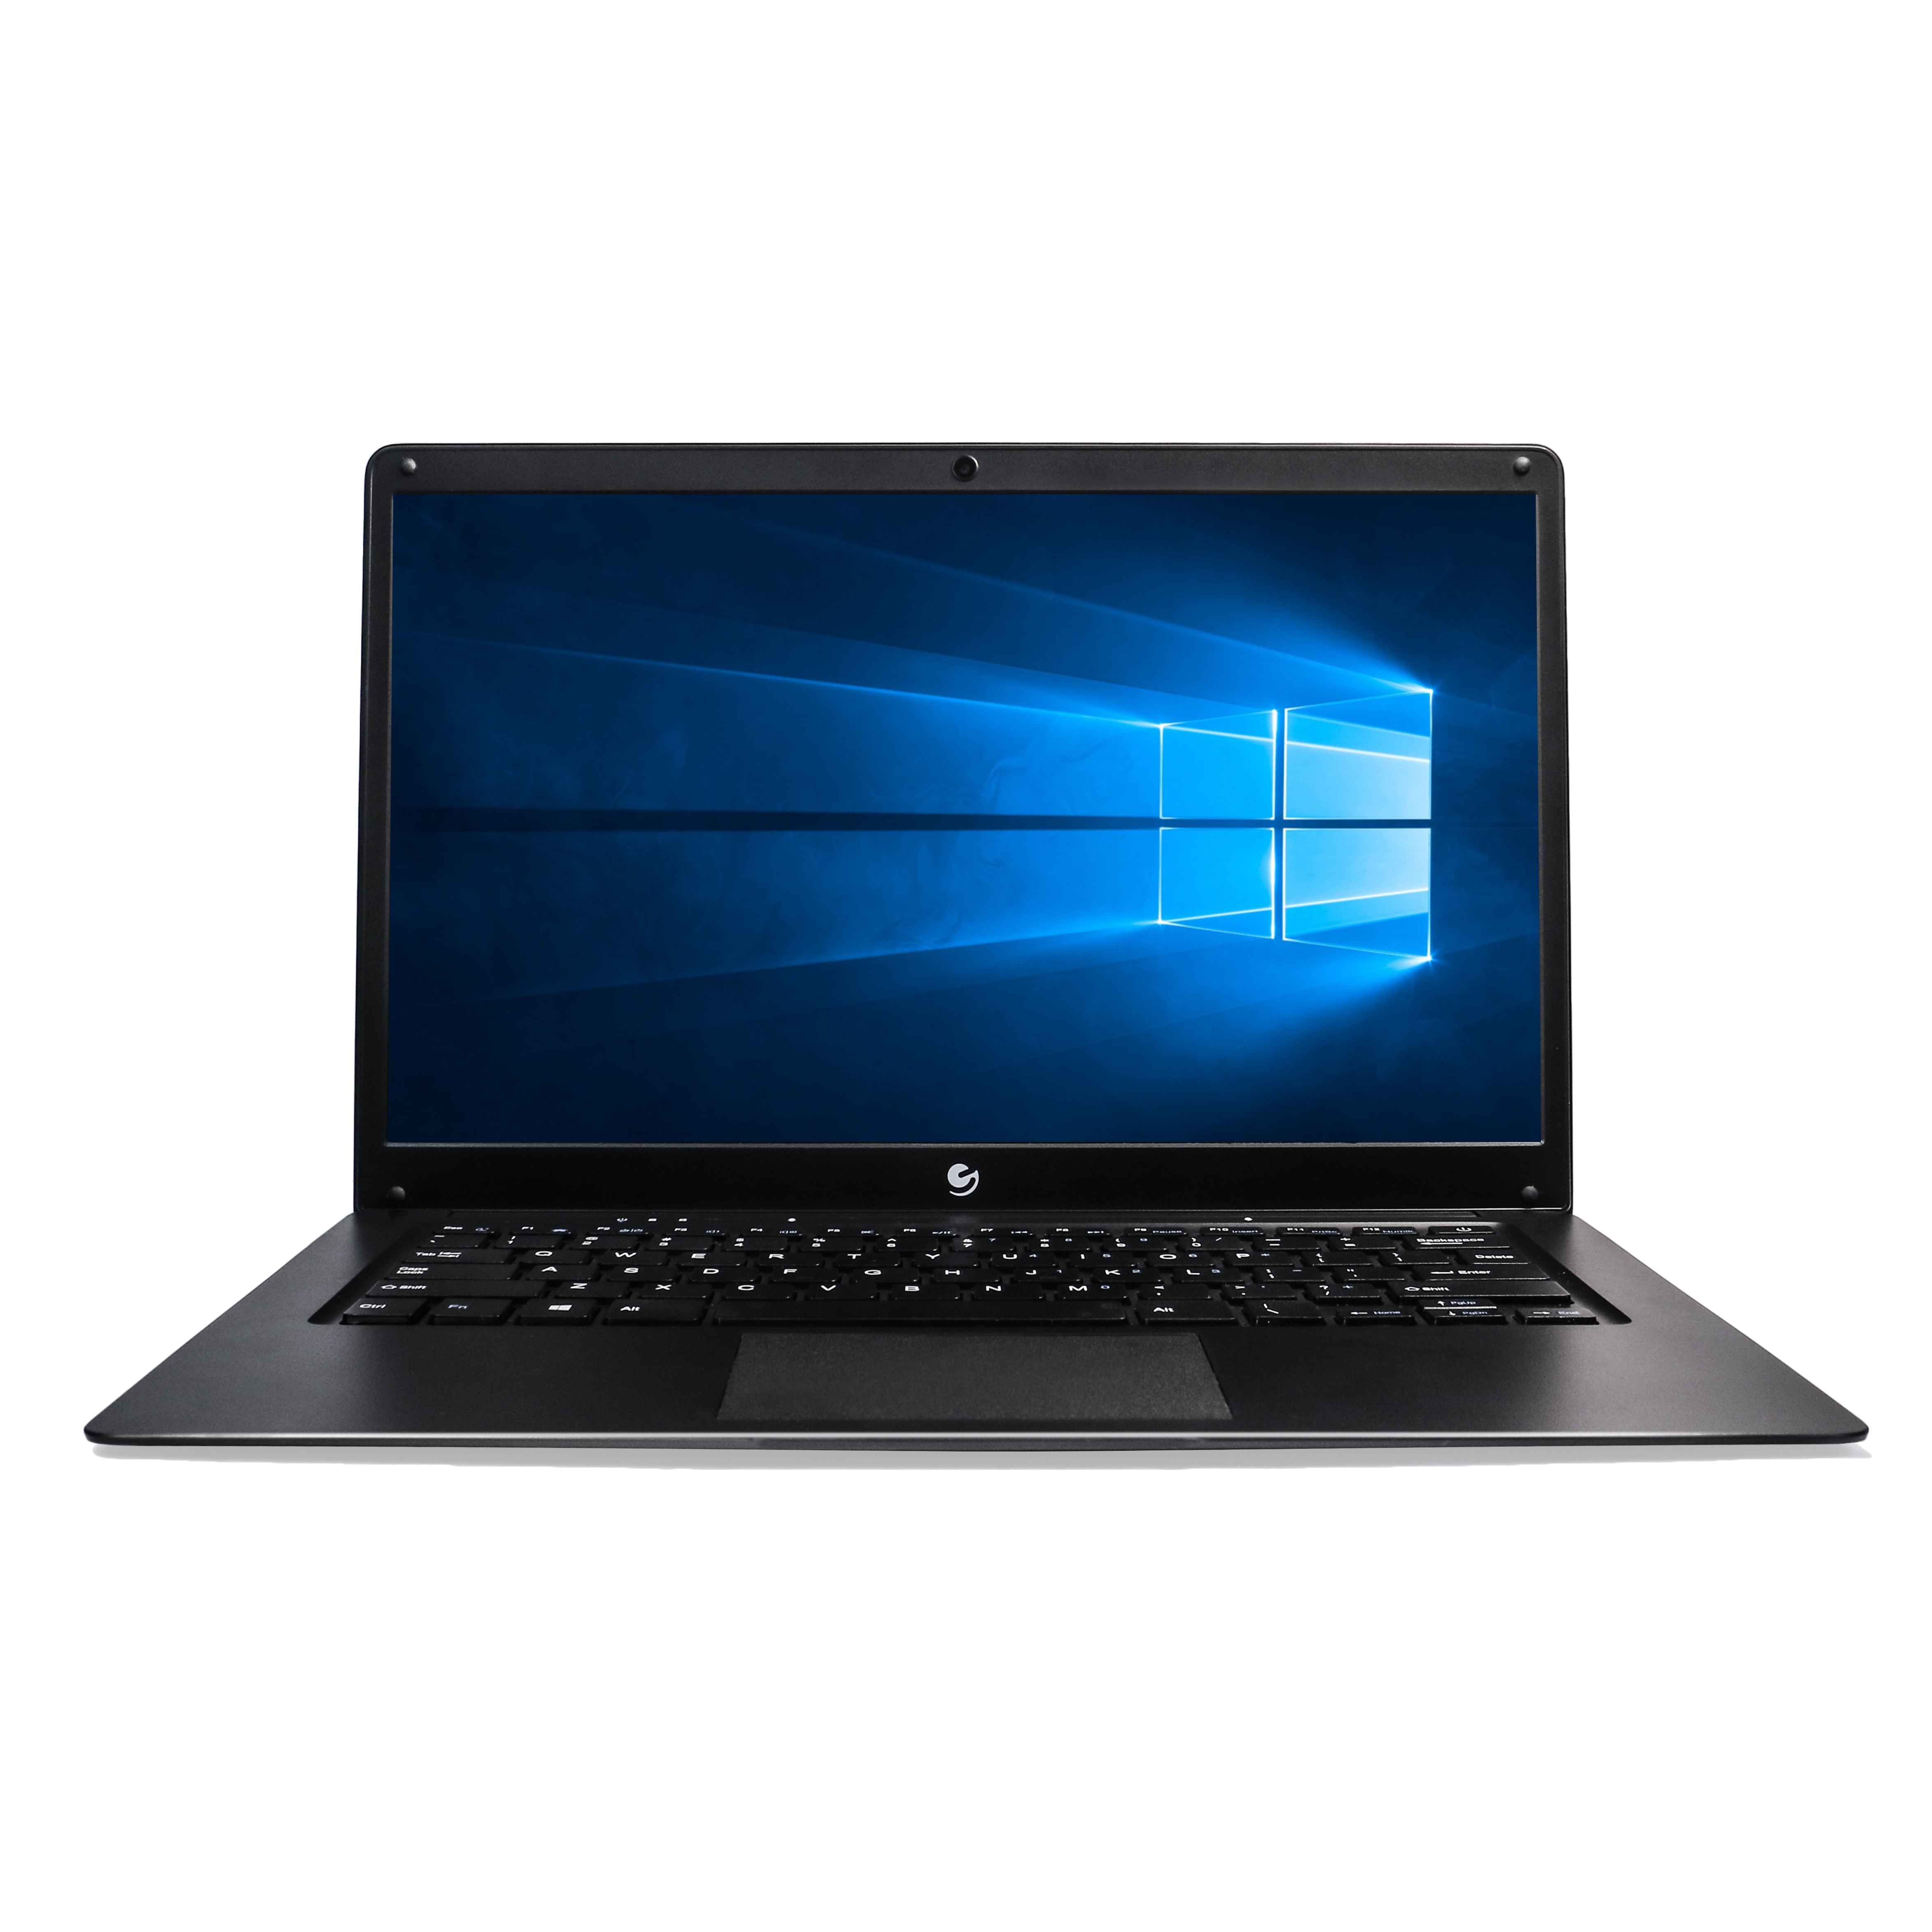 Ematic EWT147 14.1″ Laptop, Intel Atom Quad-Core Processor, 4GB RAM, 32GB Flash Storage